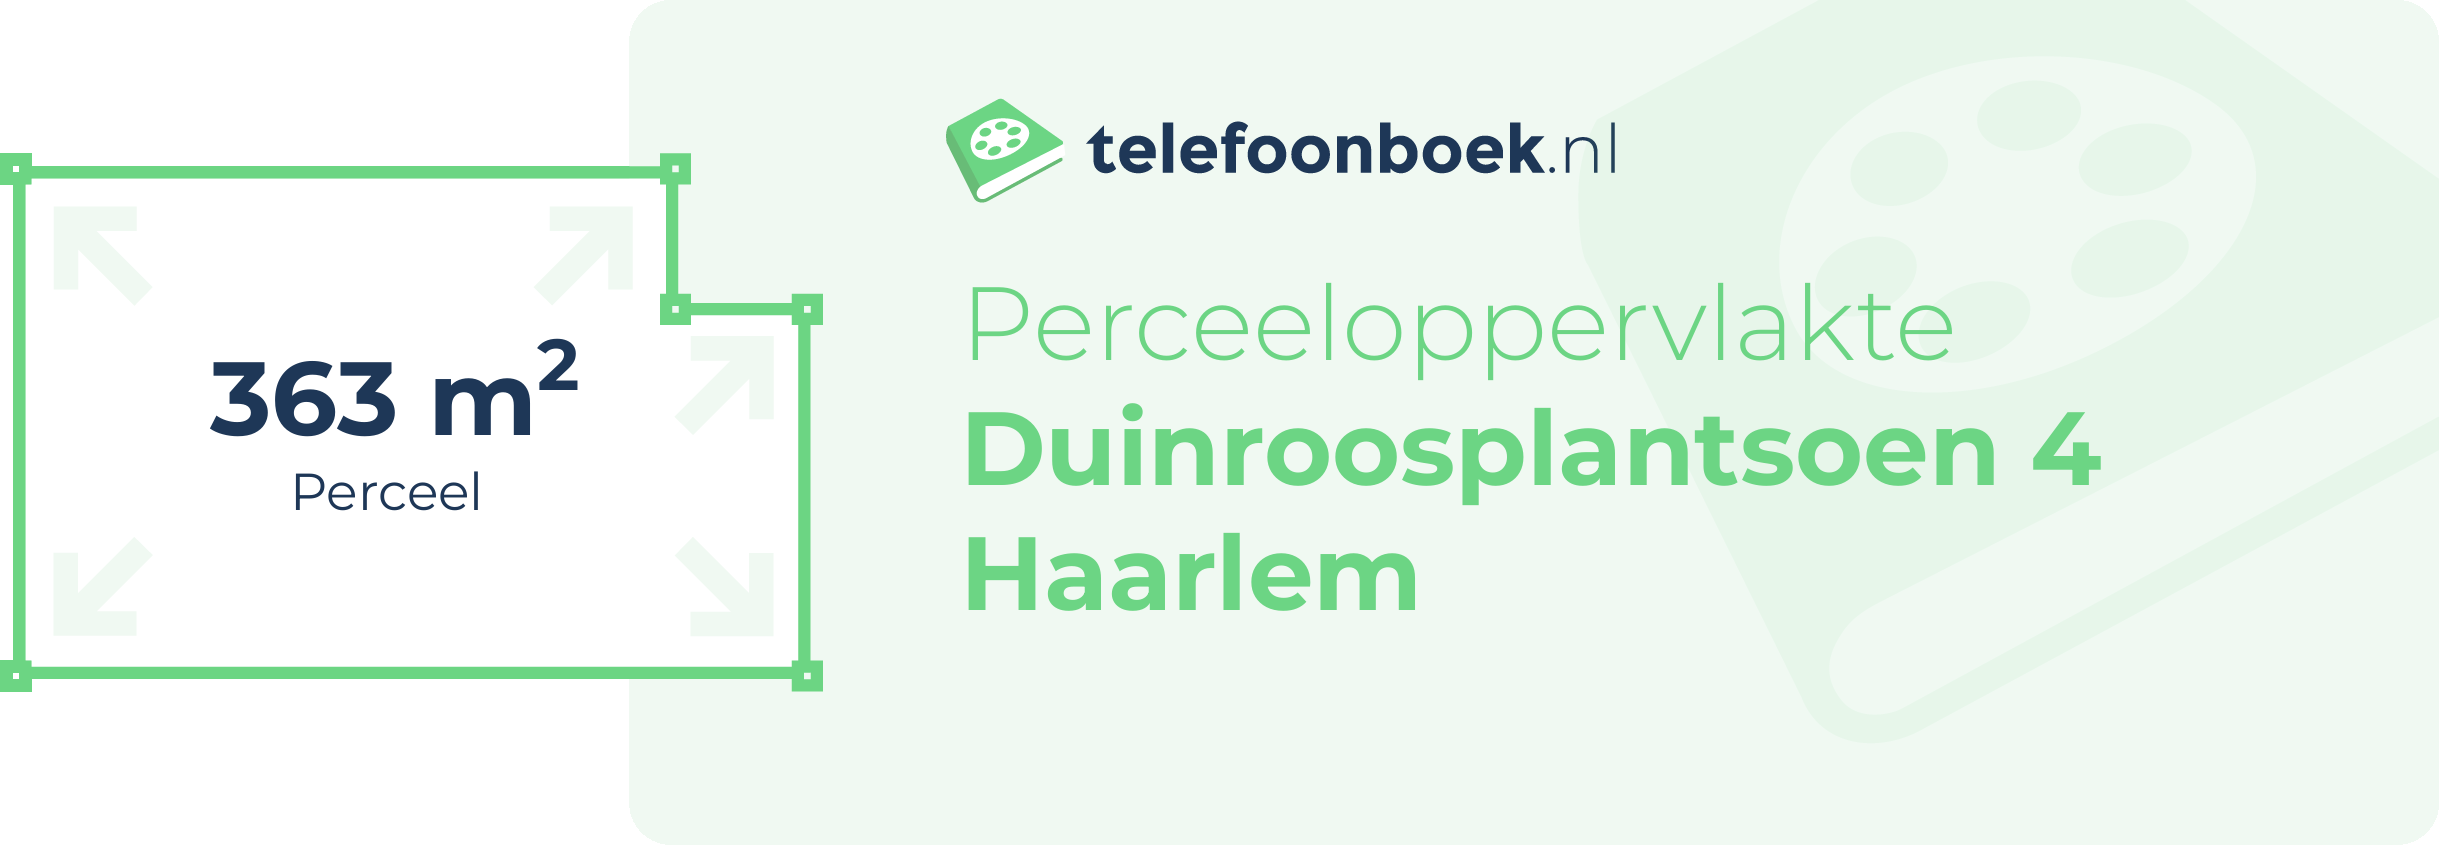 Perceeloppervlakte Duinroosplantsoen 4 Haarlem